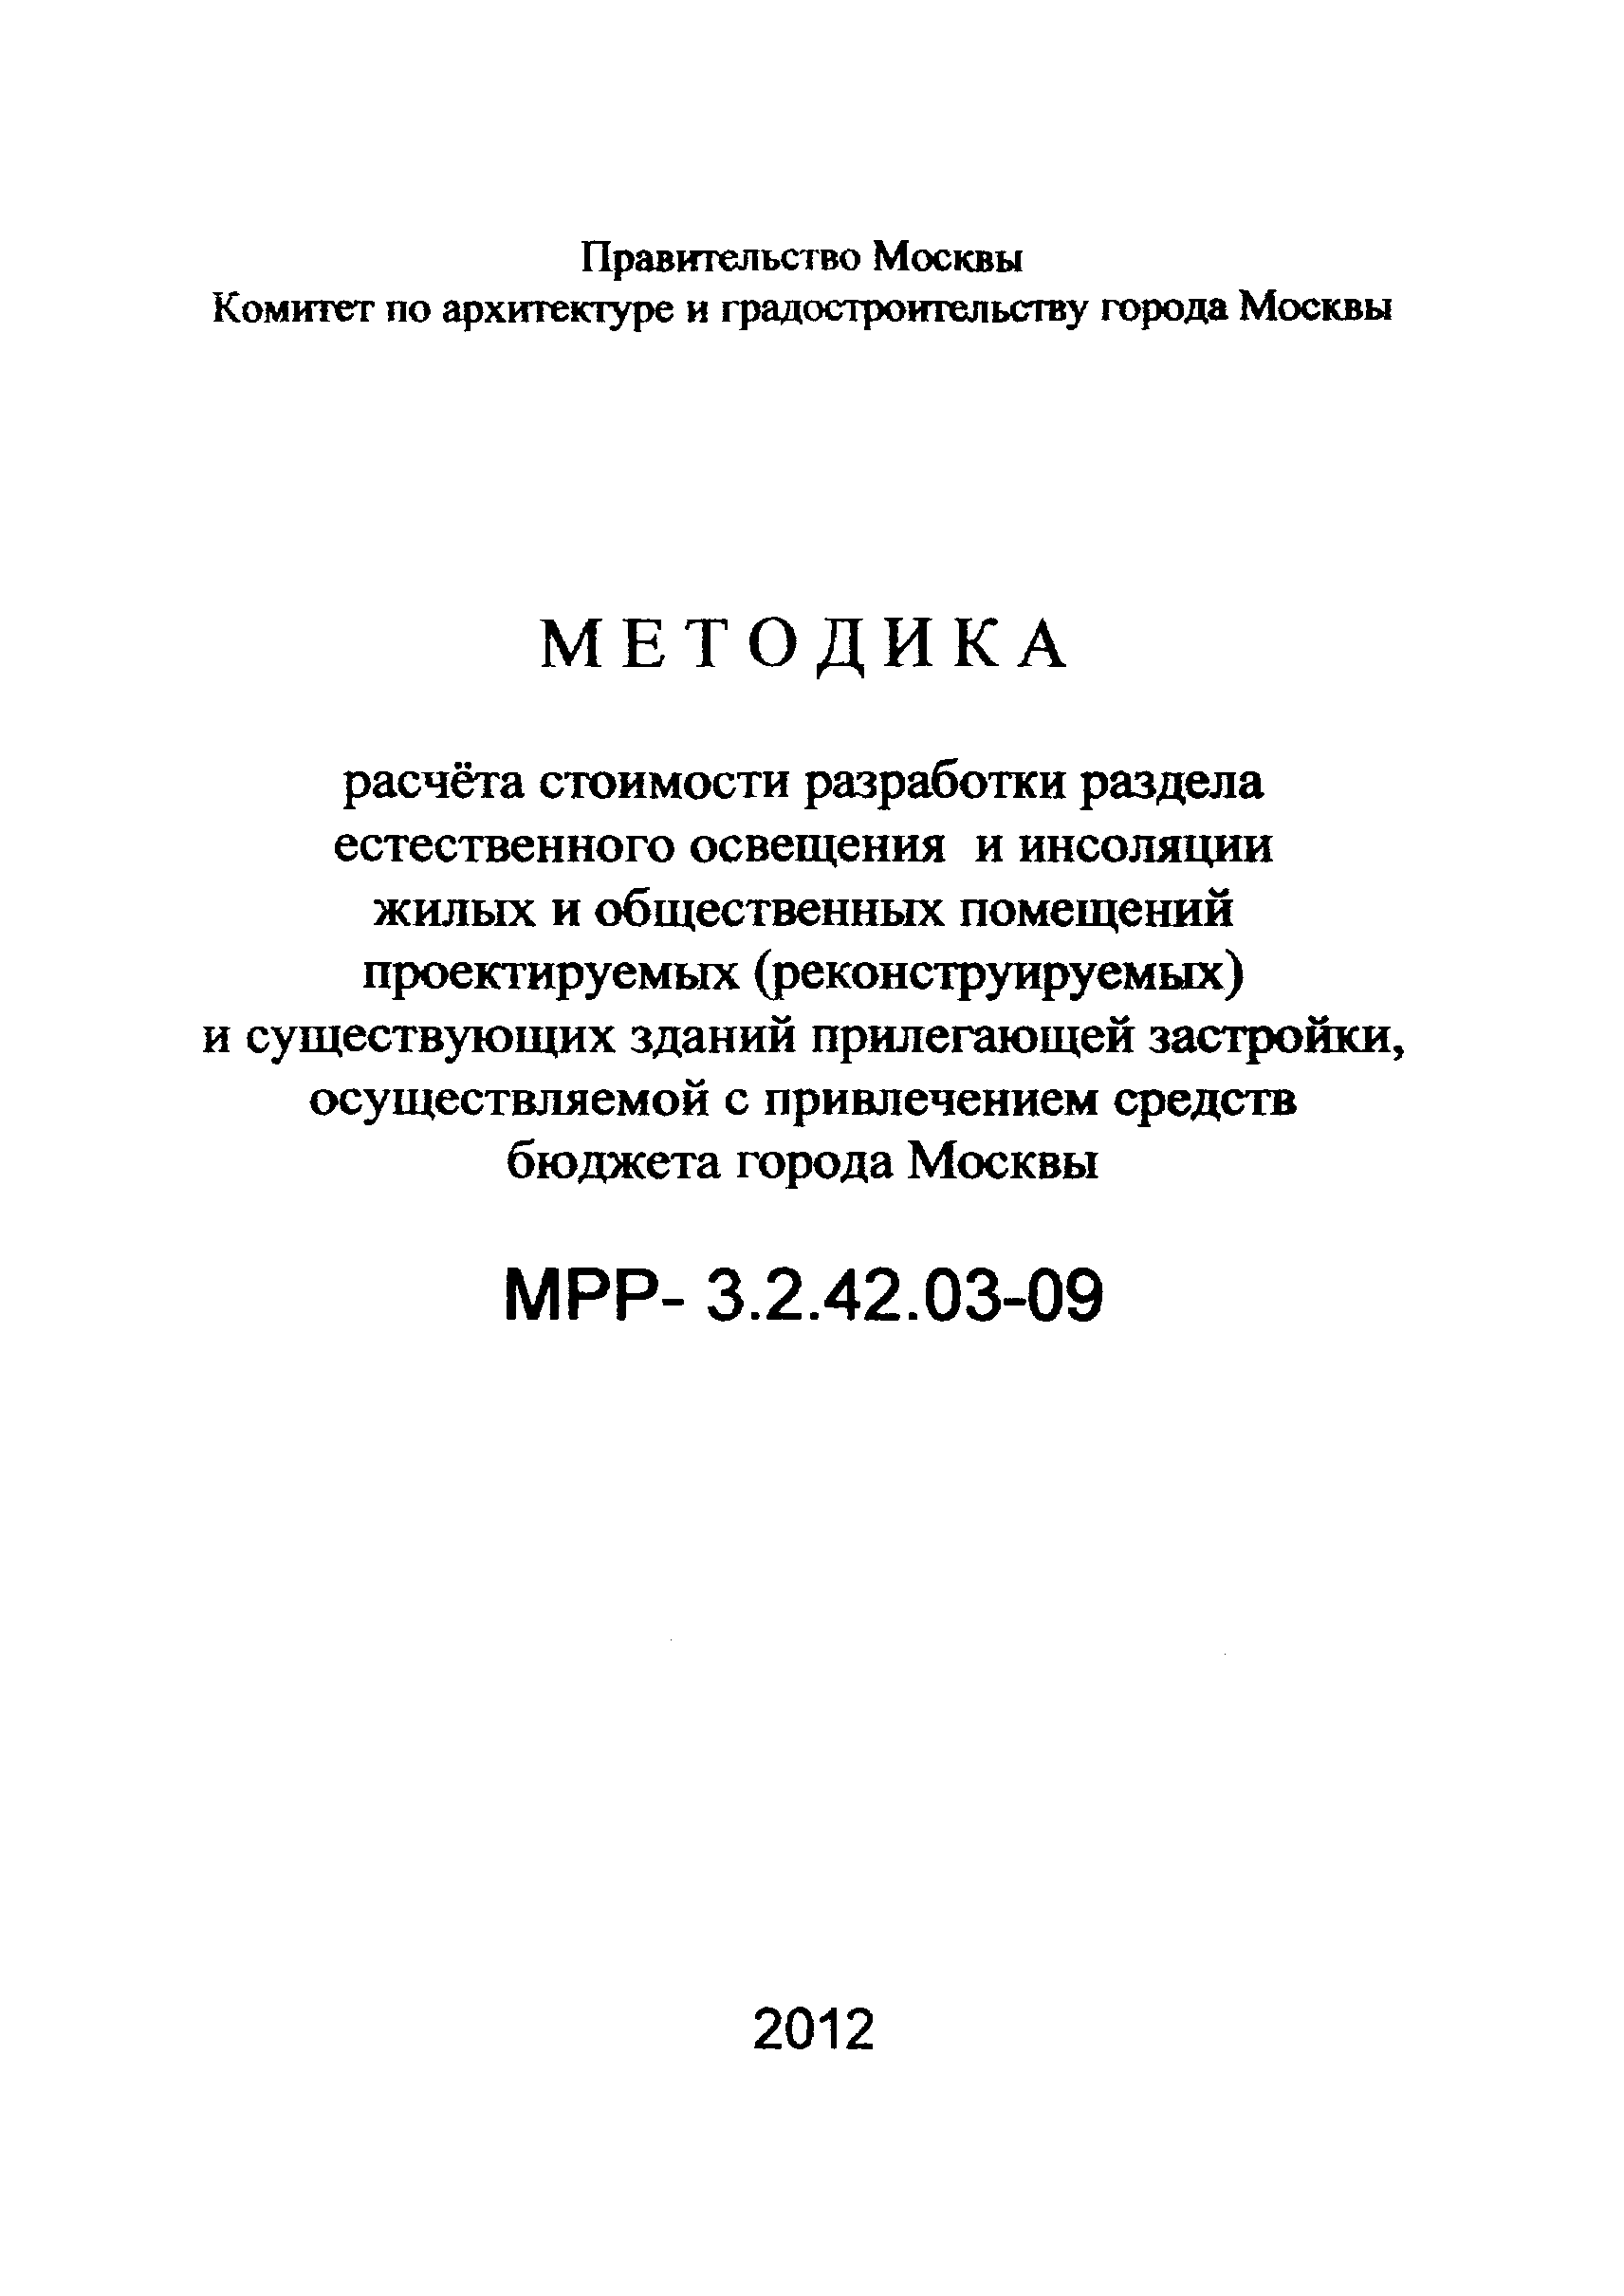 МРР 3.2.42.03-09